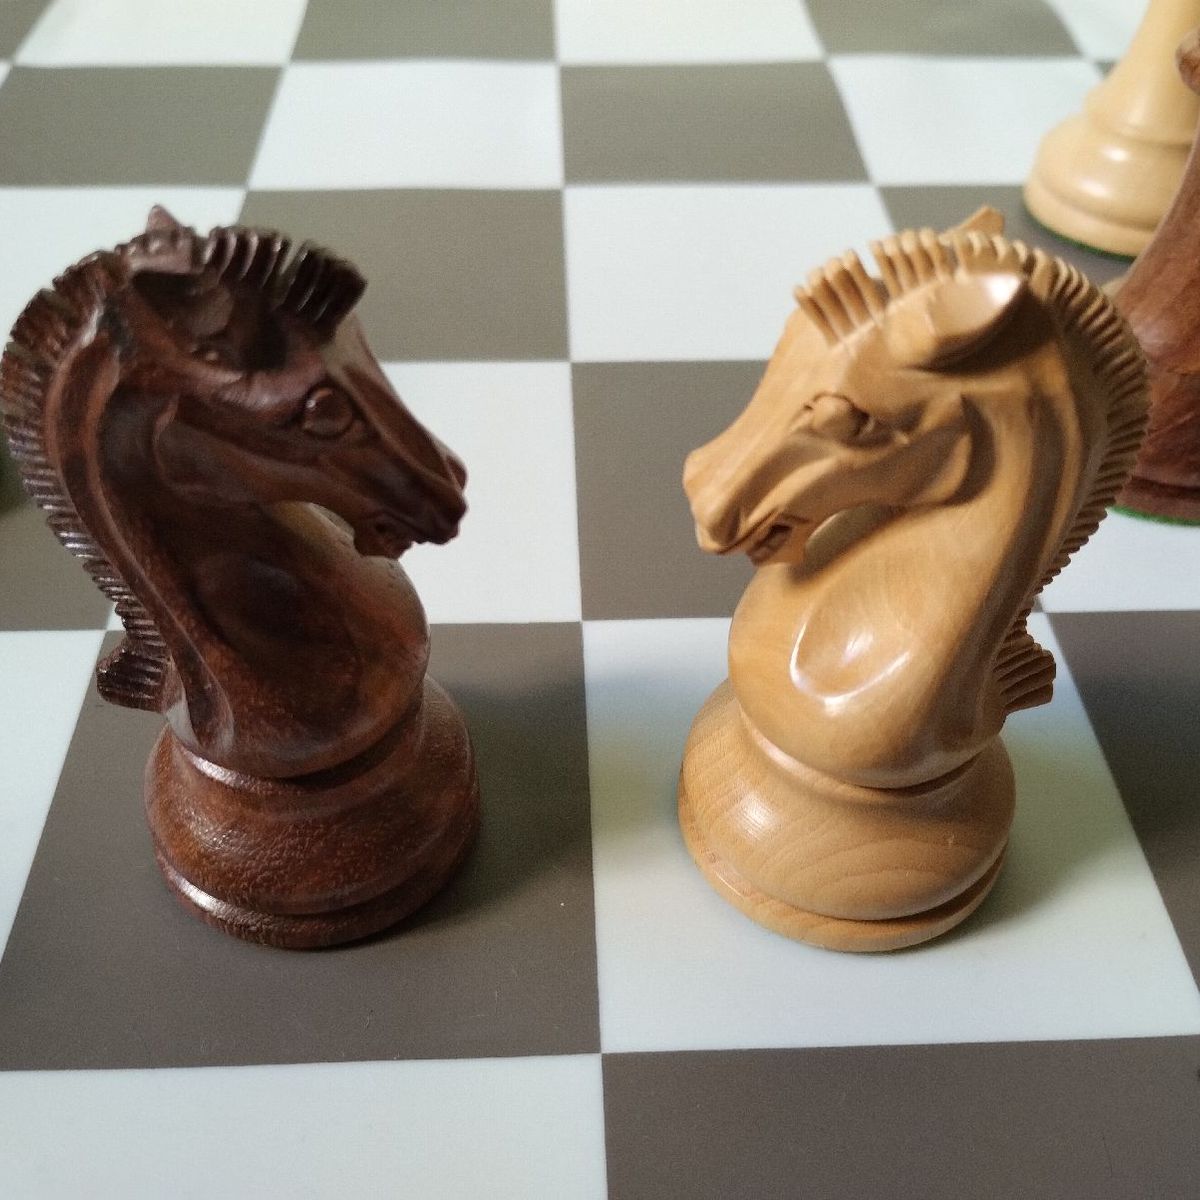 Jogadores de xadrez indianos deixando um legado em tabuleiros